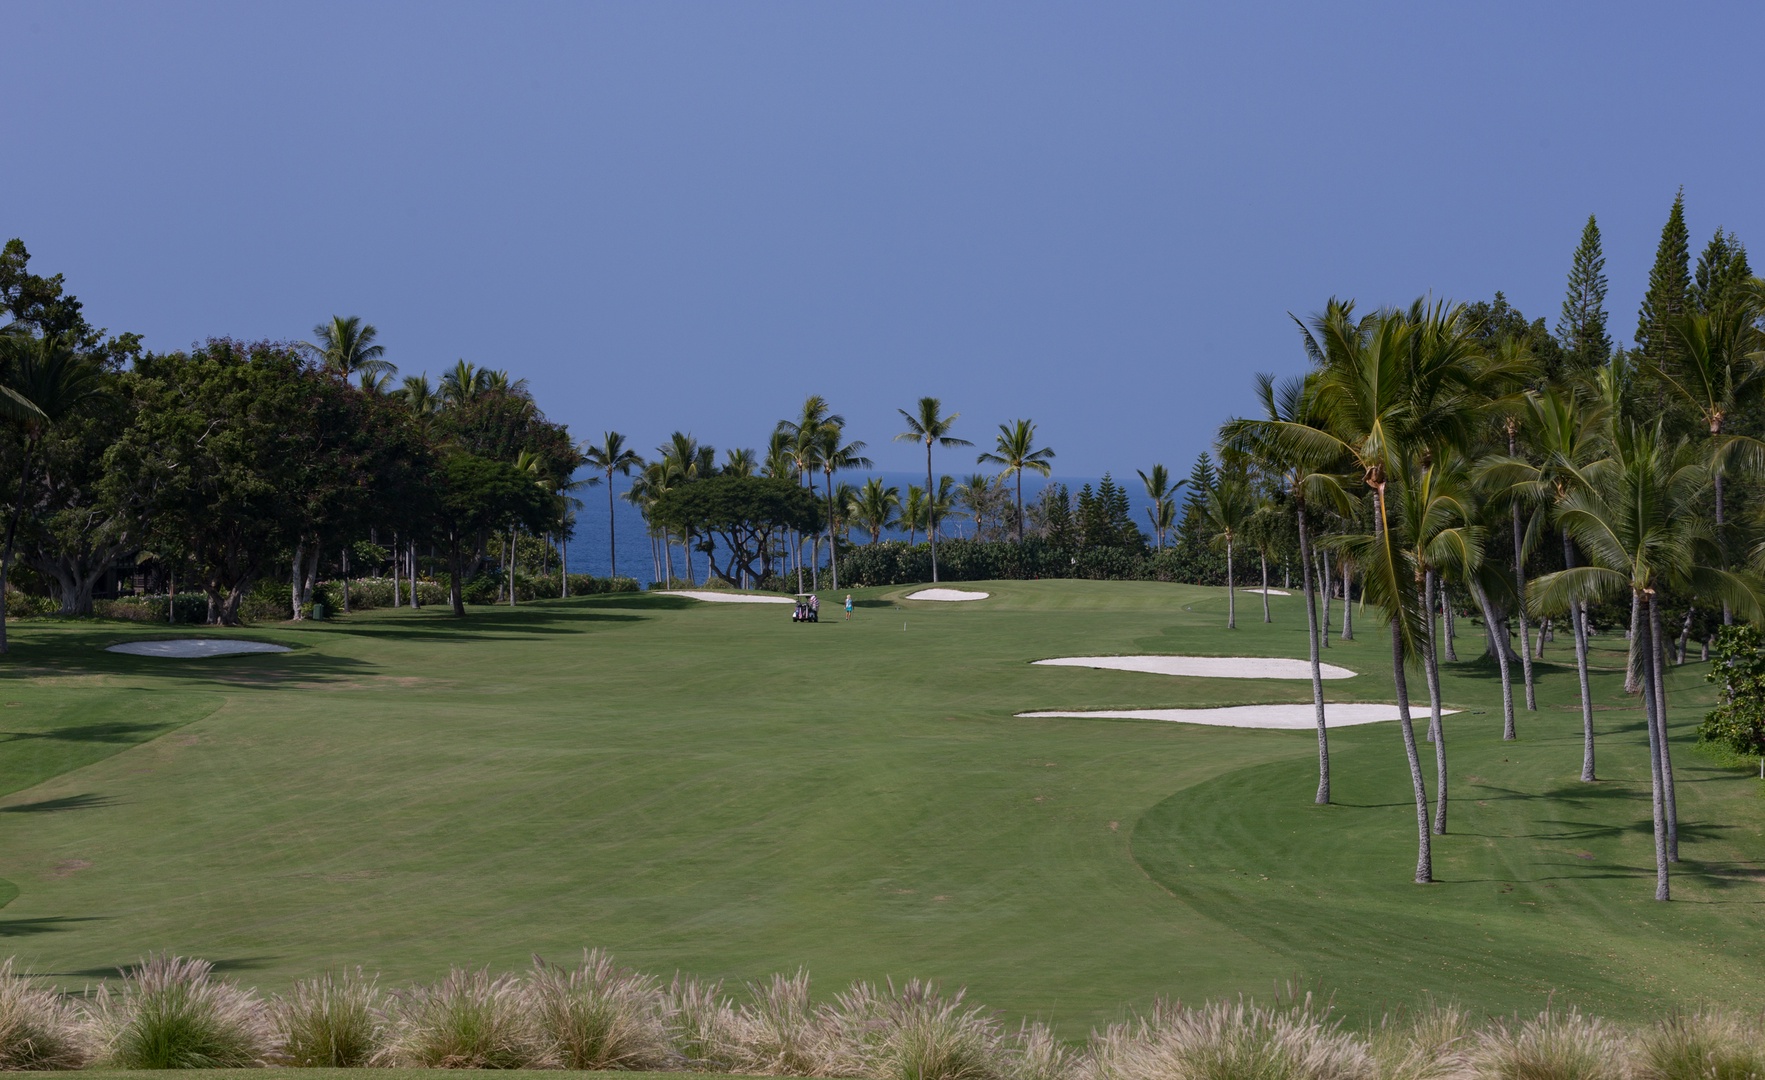 Kailua Kona Vacation Rentals, He'eia Bay Beach Bungalow (Big Island) - Views of the Kona Country Club Golf Course.